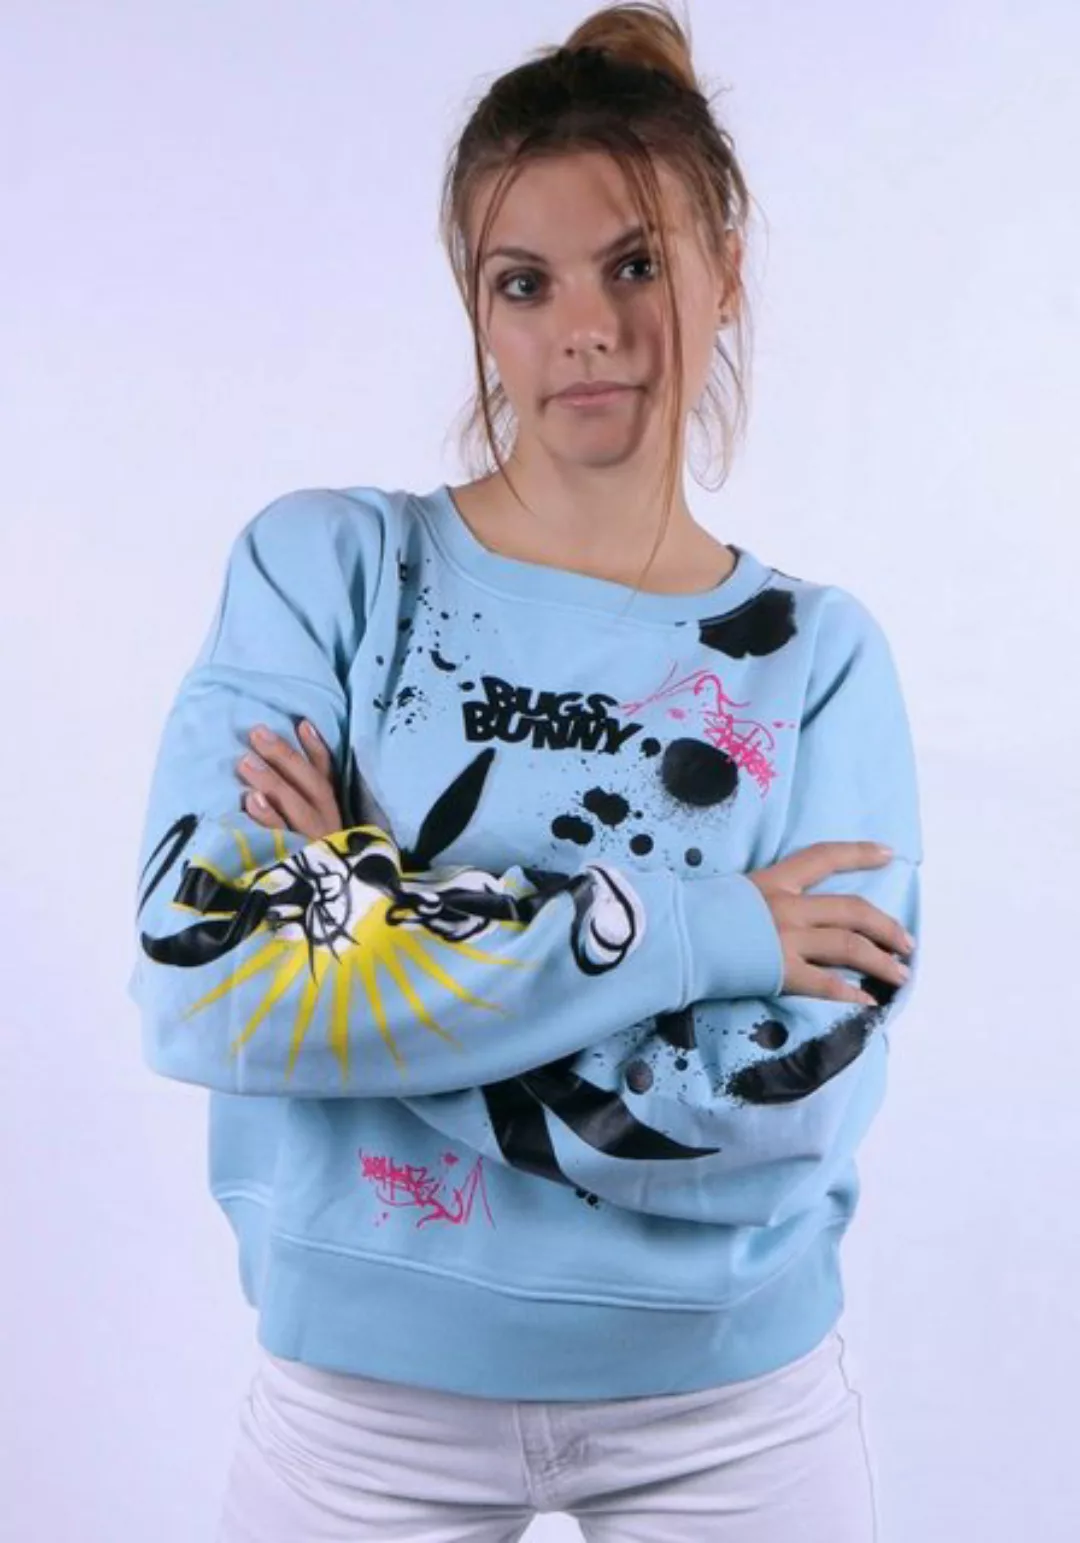 Capelli New York Sweatshirt Bugs Bunny allover gemustert günstig online kaufen